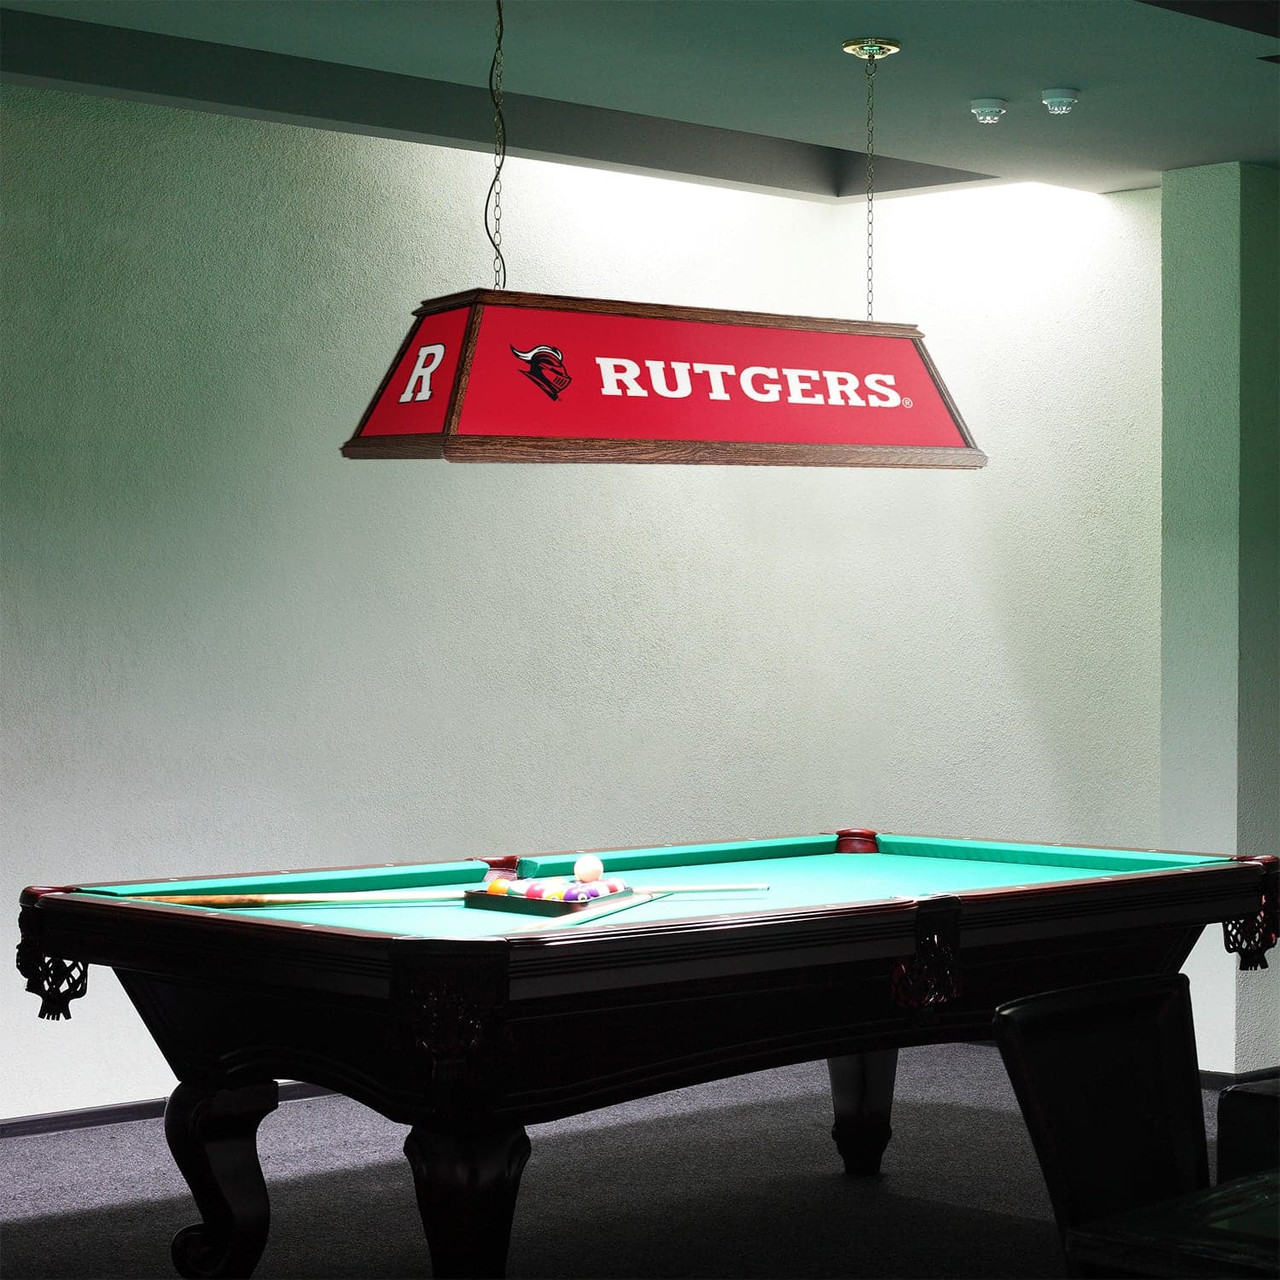 Rutgers, Scarlet, Knights, Premium, Wood, Billiard, Pool, Table, Light, Lamp, NCRTGR-330-01A, NCRTGR-330-01B, The Fan-Brand, 689481023366